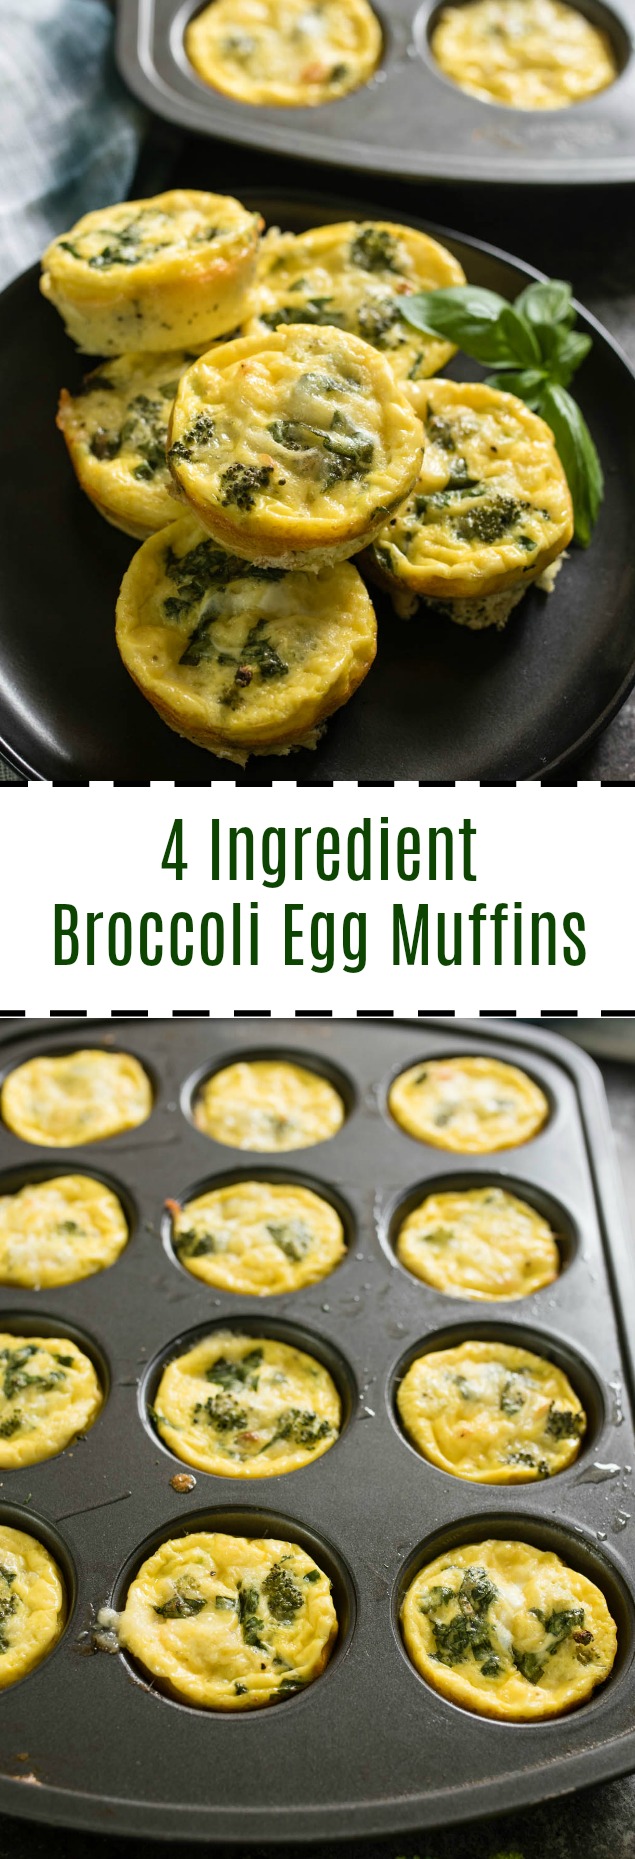 4 Ingredient Broccoli Egg Muffins